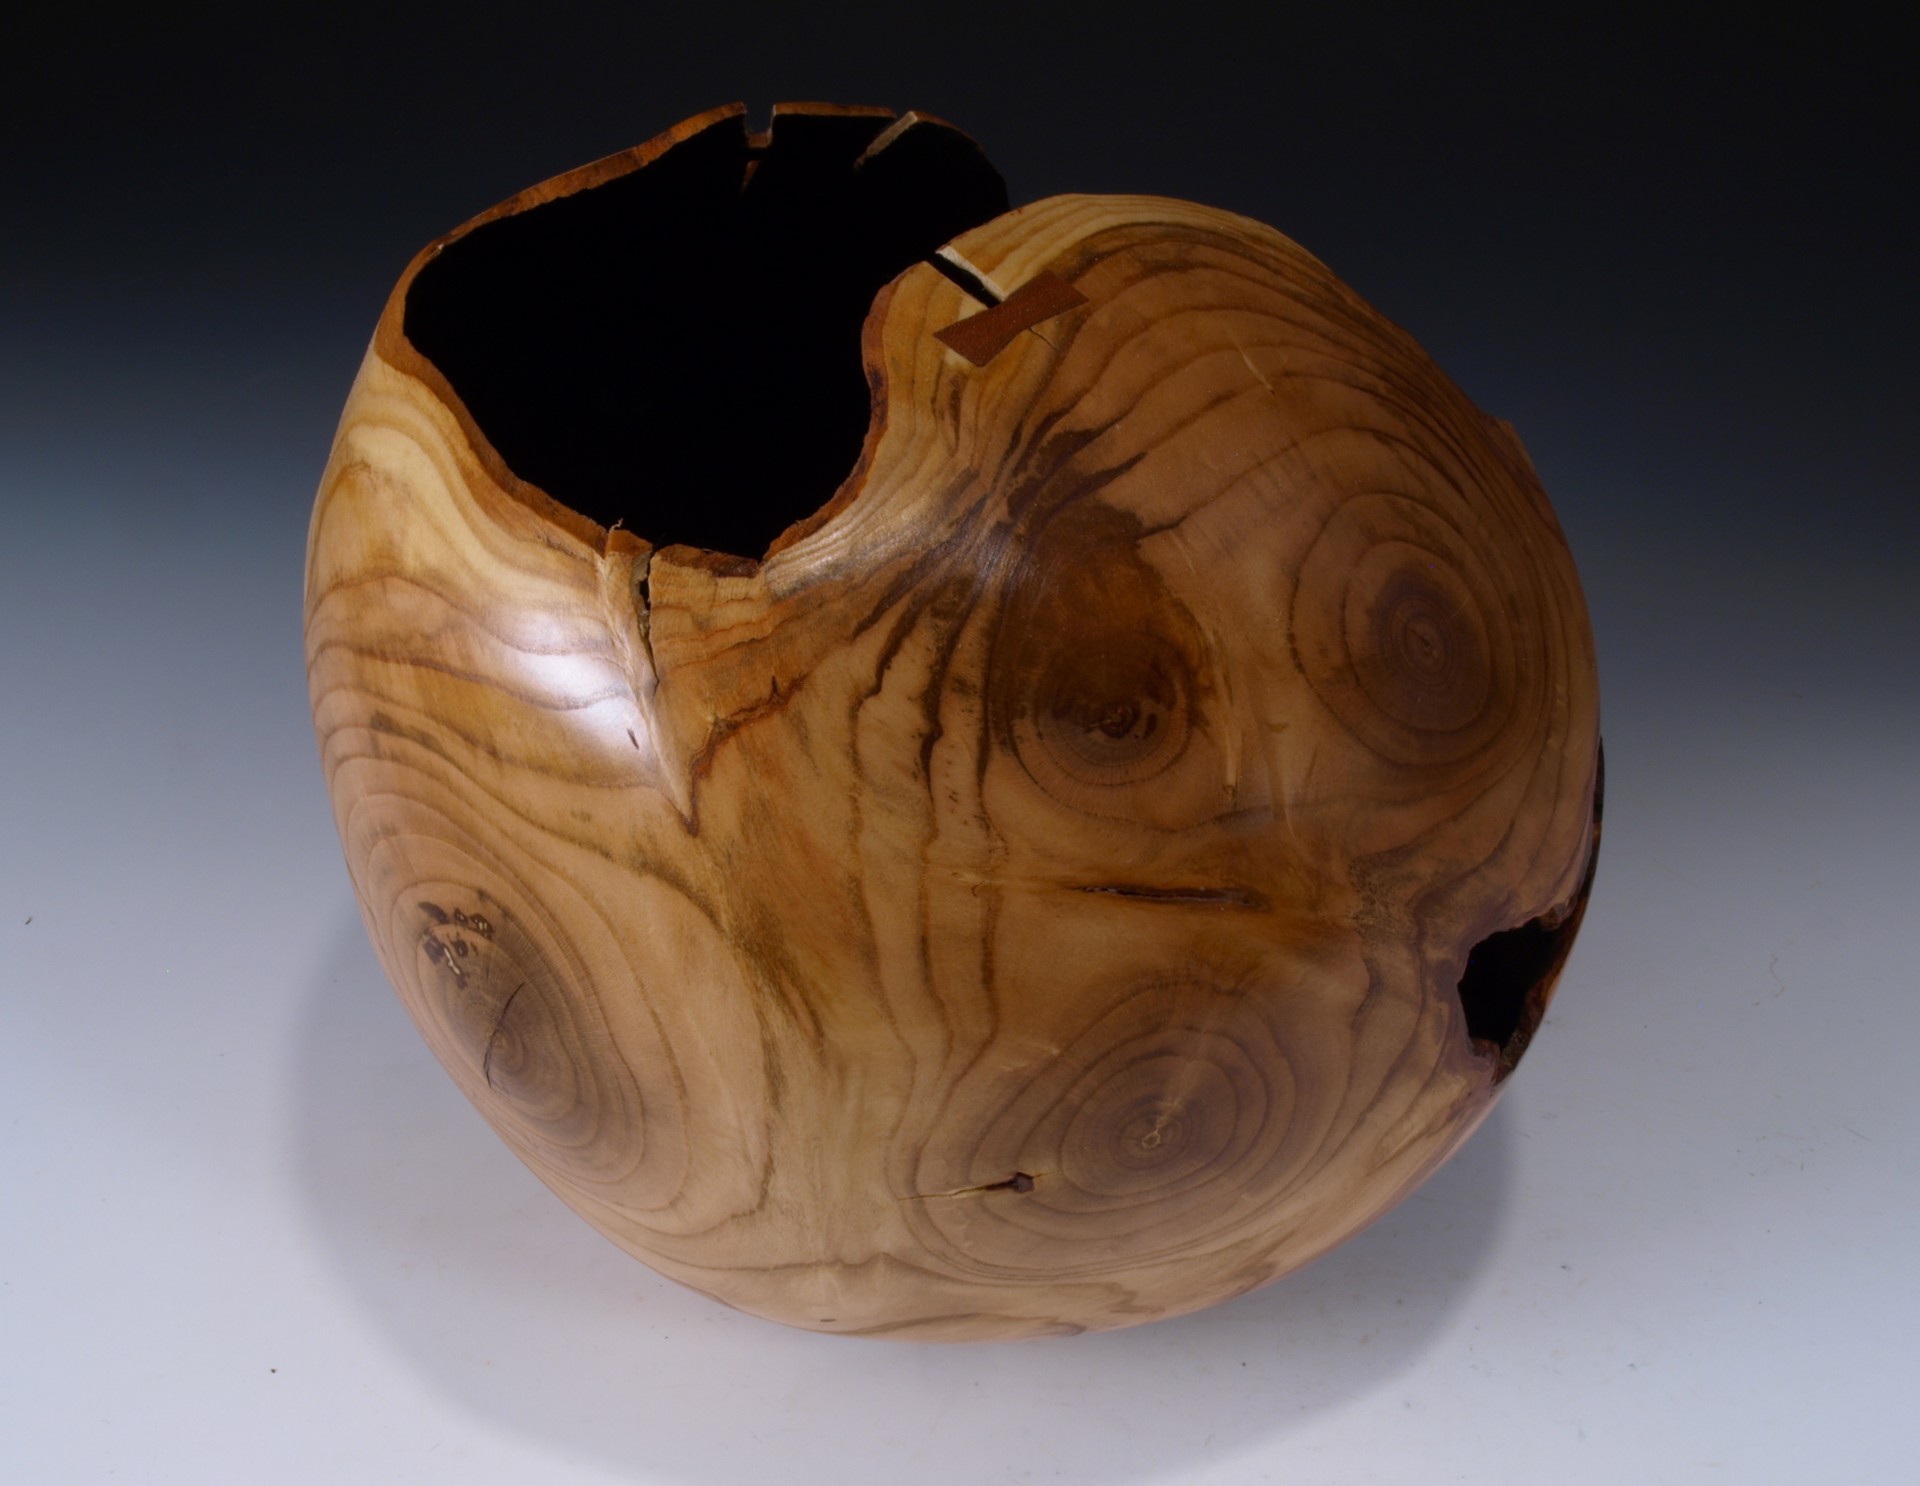 Hollow Peach Wood Vessel by Michael Hampel